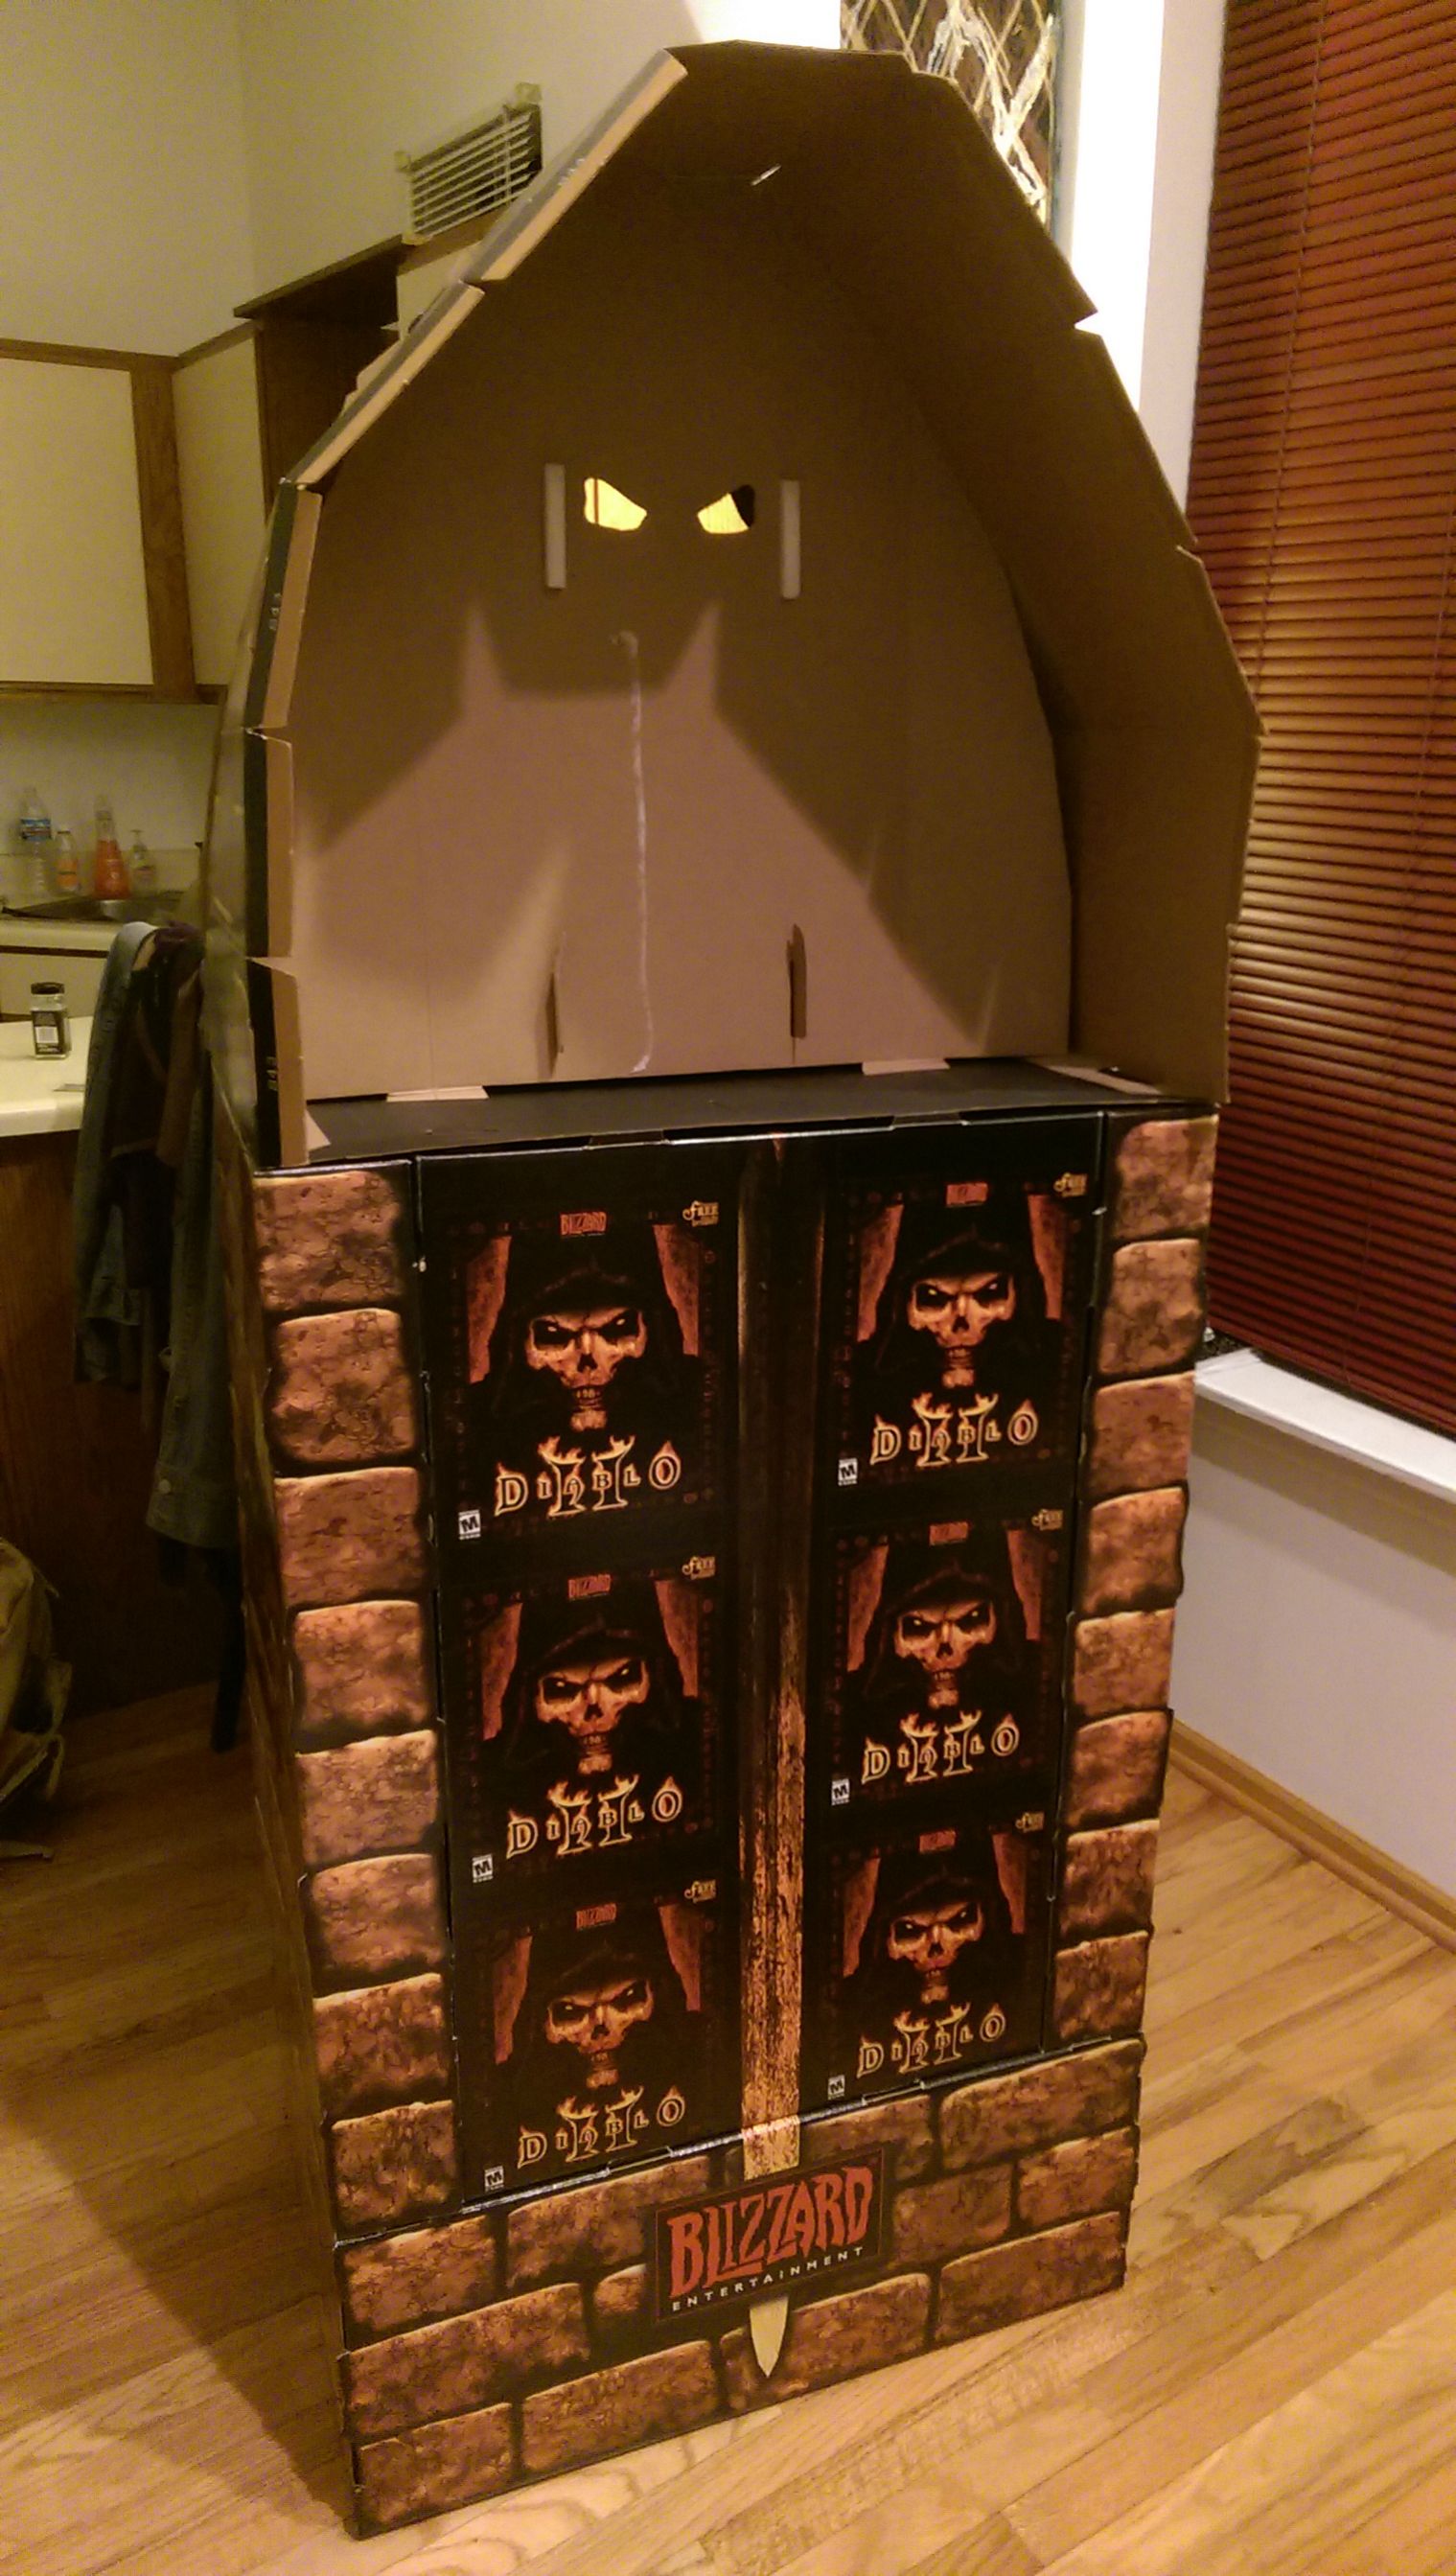 Diablo II Store Display Case